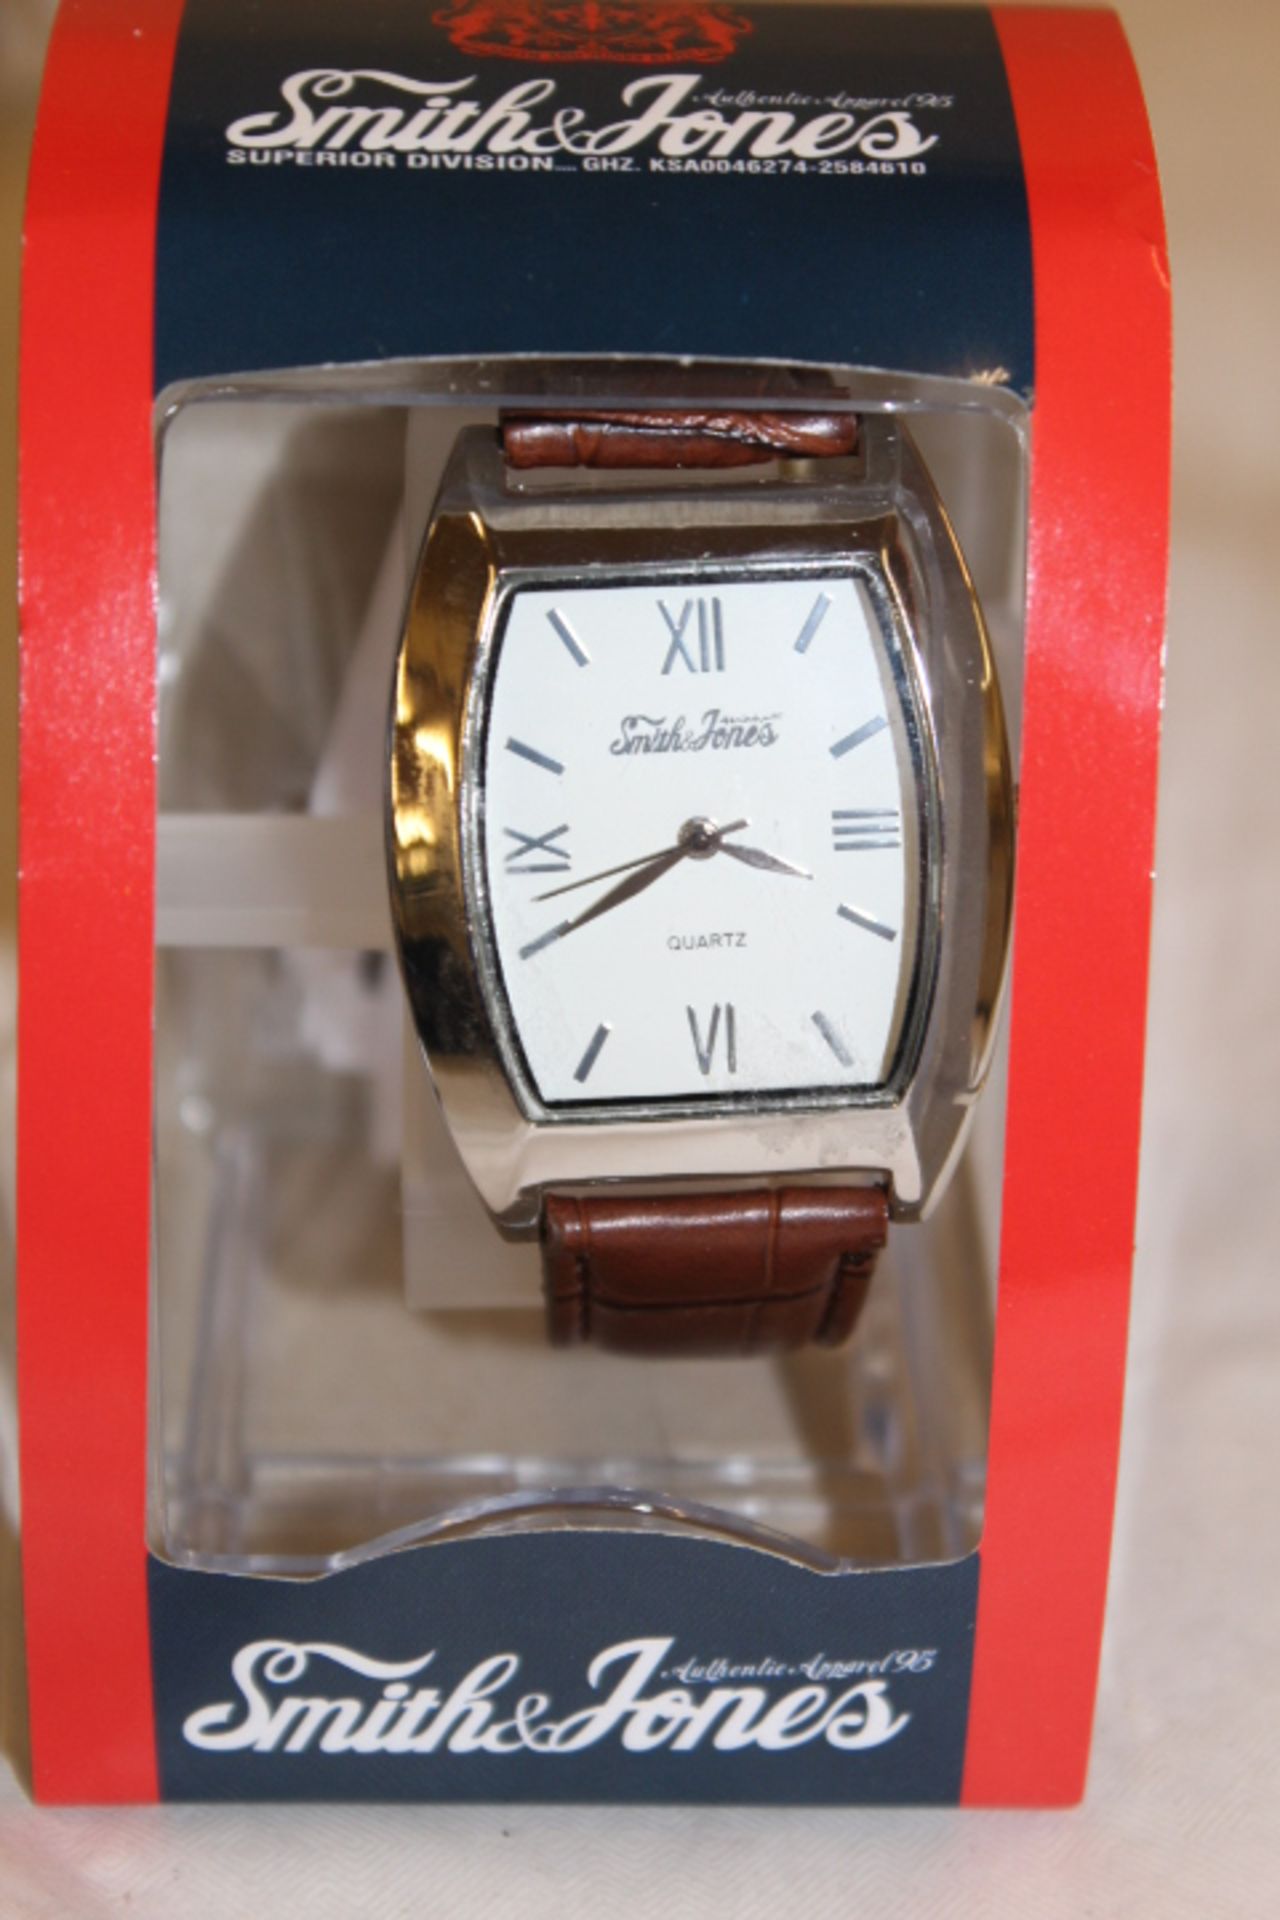 V Gents Smith & Jones Quartz Watch - Brown Strap - Image 2 of 2